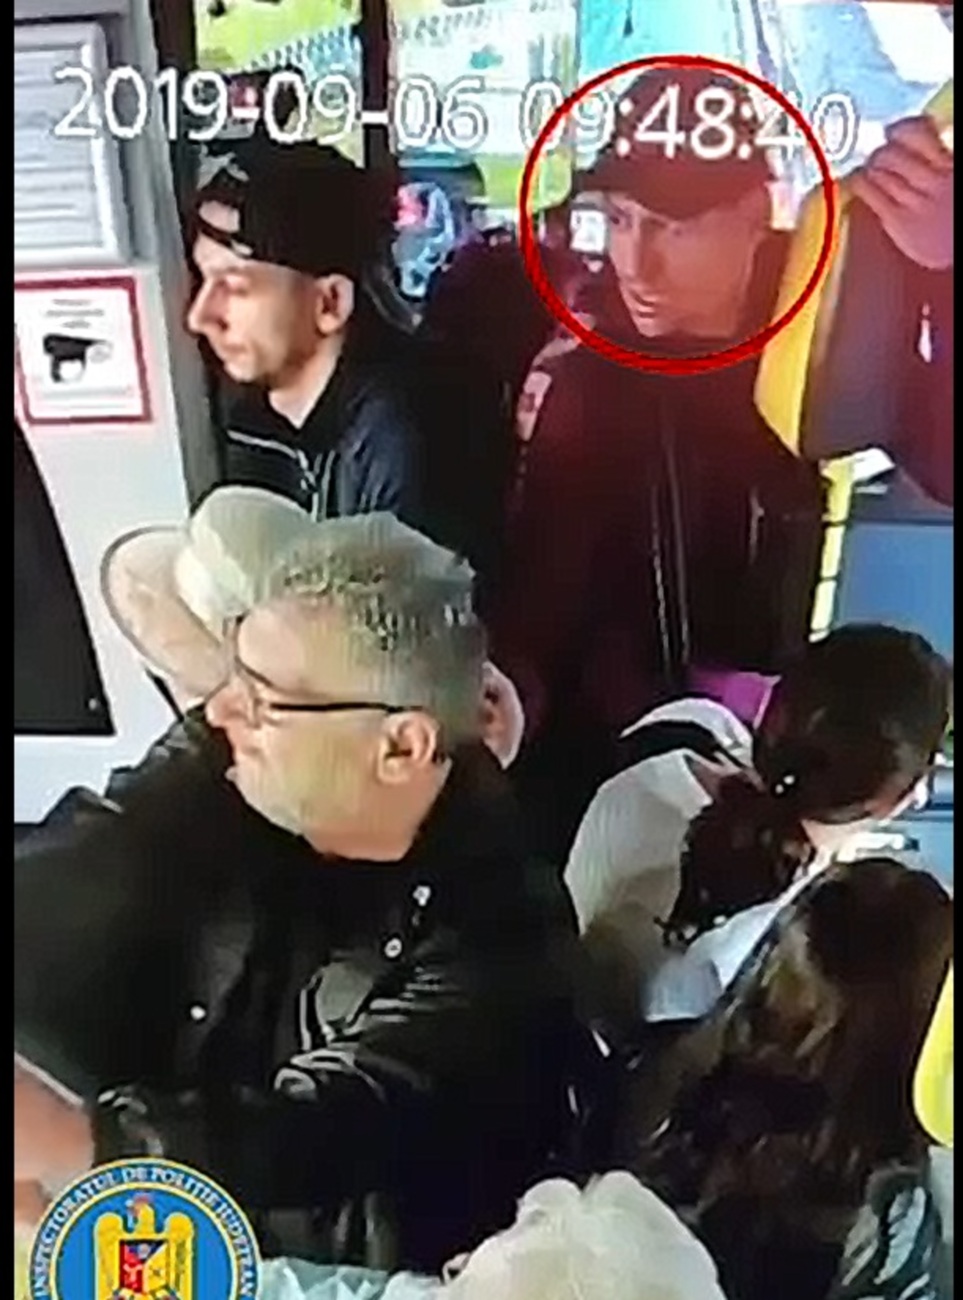 VIDEO: Tun de 14.000 de dolari, prin furtul din poșete în autobuzul Tursib. Hoția, filmată